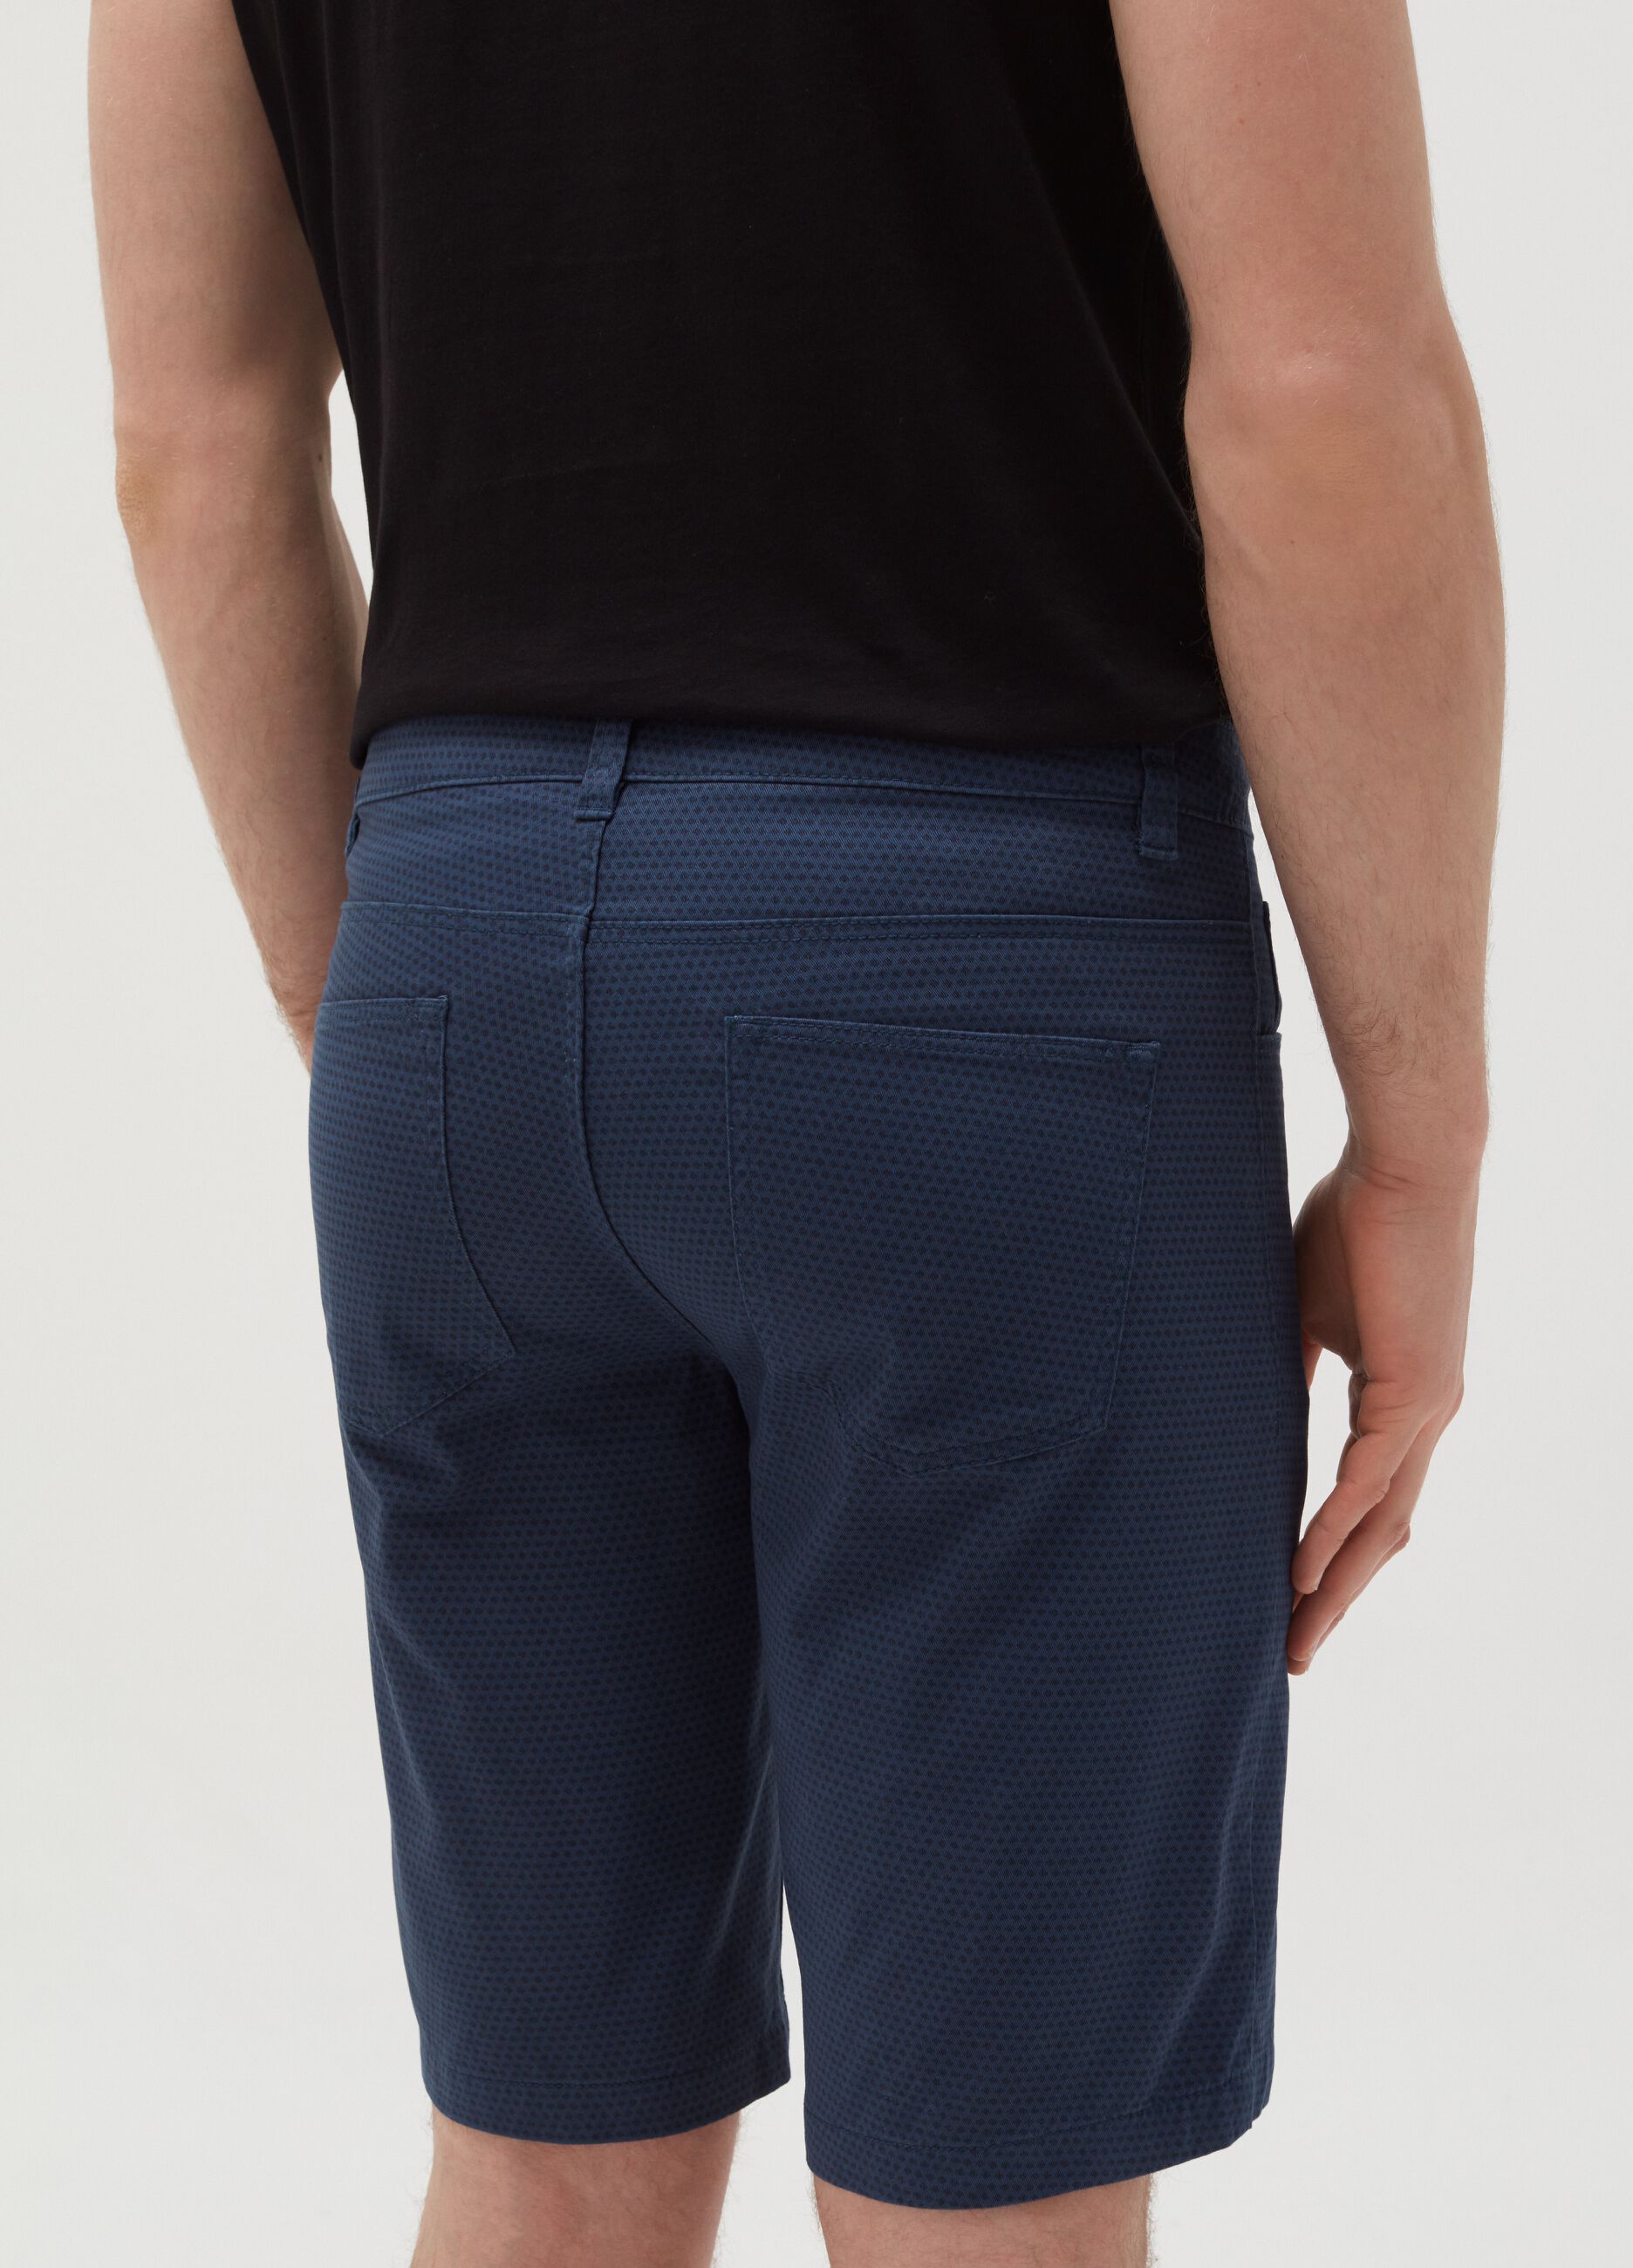 Cotton Bermuda shorts with micro pattern